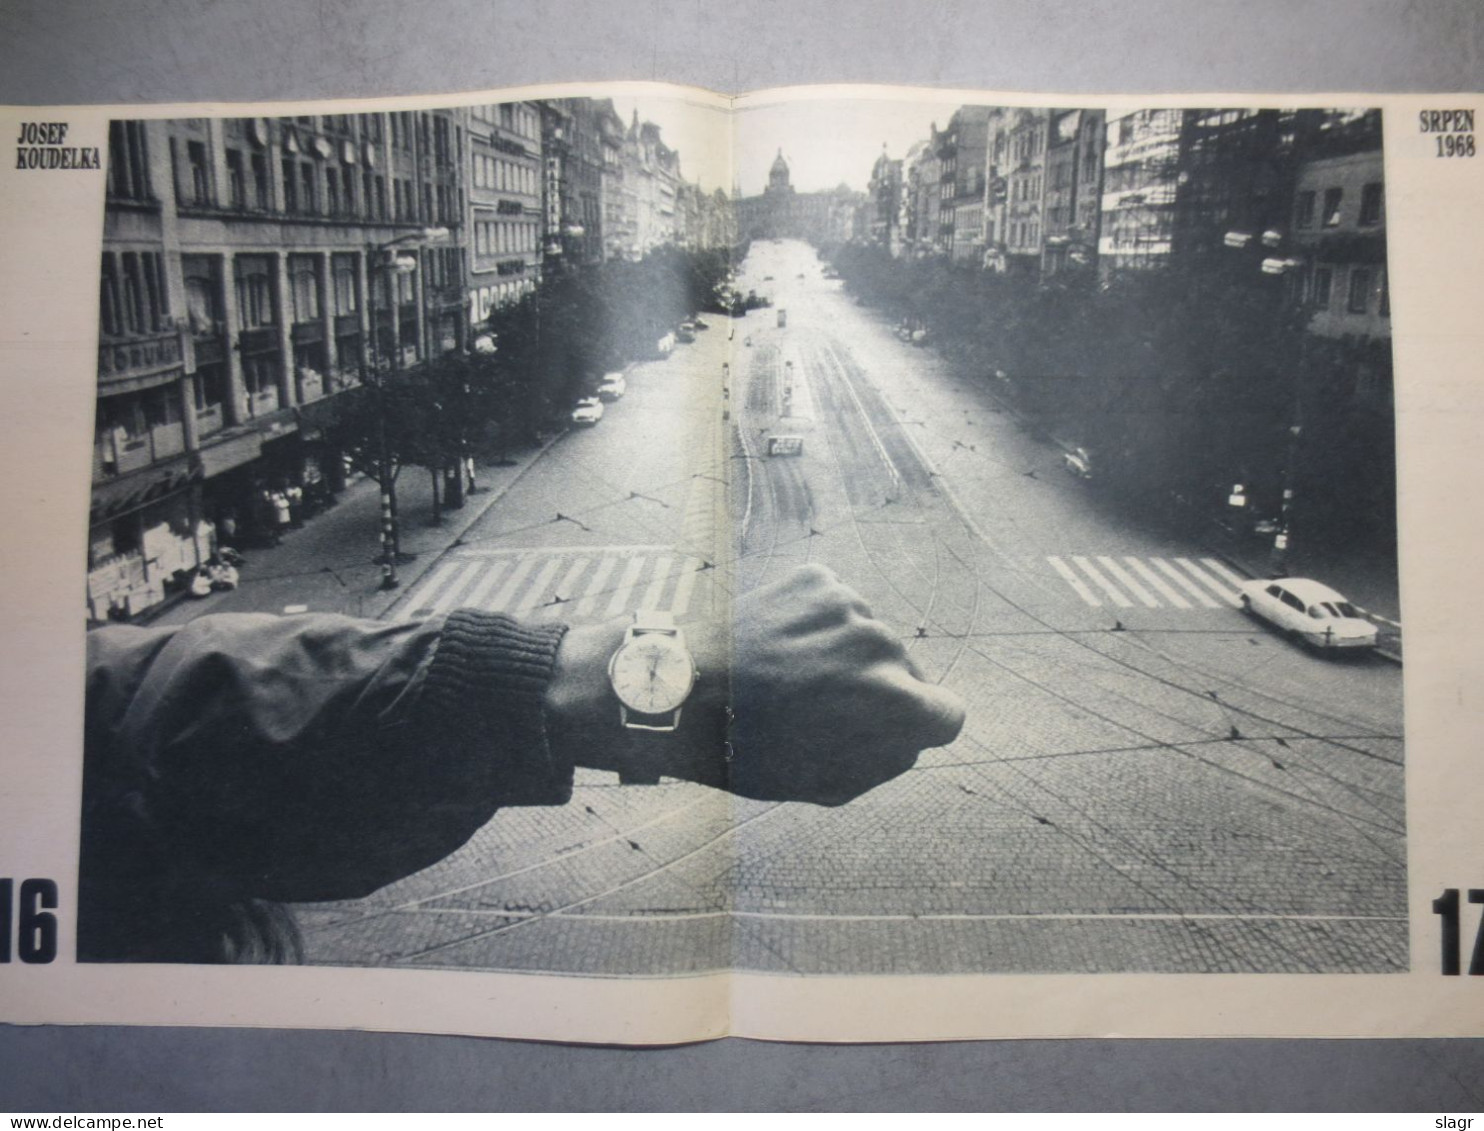 Josef Koudelka - Reflex - photos from 1968 - magazin - very nice photos - 1990